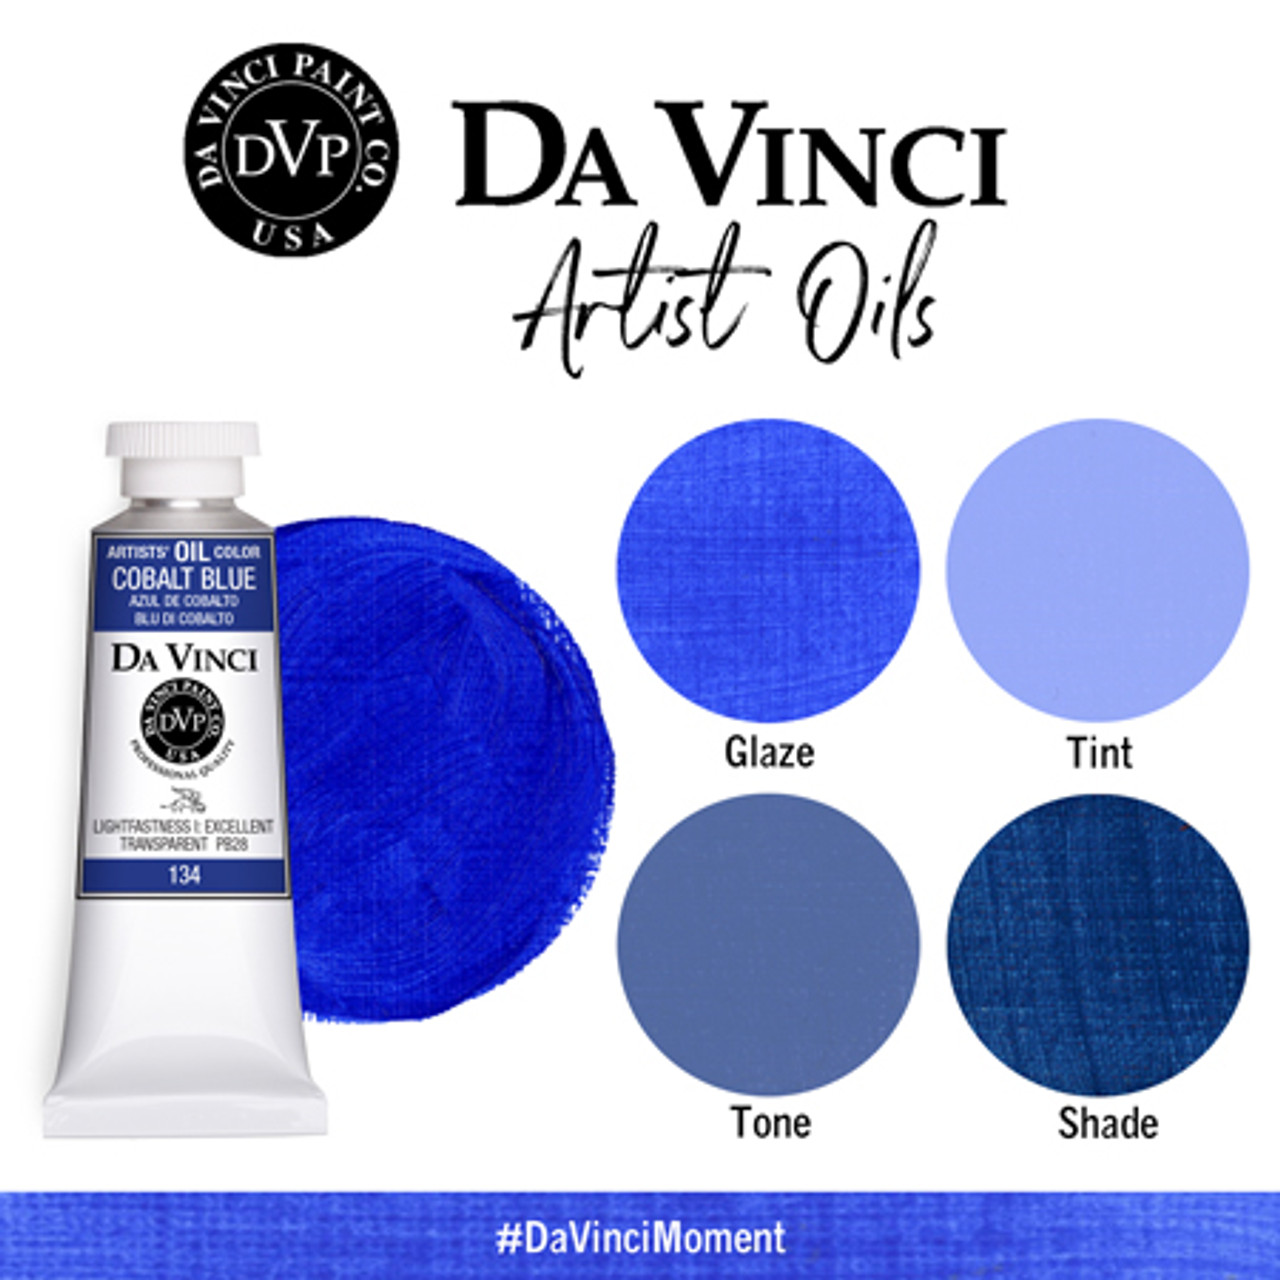 https://cdn11.bigcommerce.com/s-9n4xcihrak/images/stencil/1280x1280/products/192/1523/Da-Vinci-Cobalt-Blue-oil-paint-color-examples__49580.1645656605.jpg?c=1